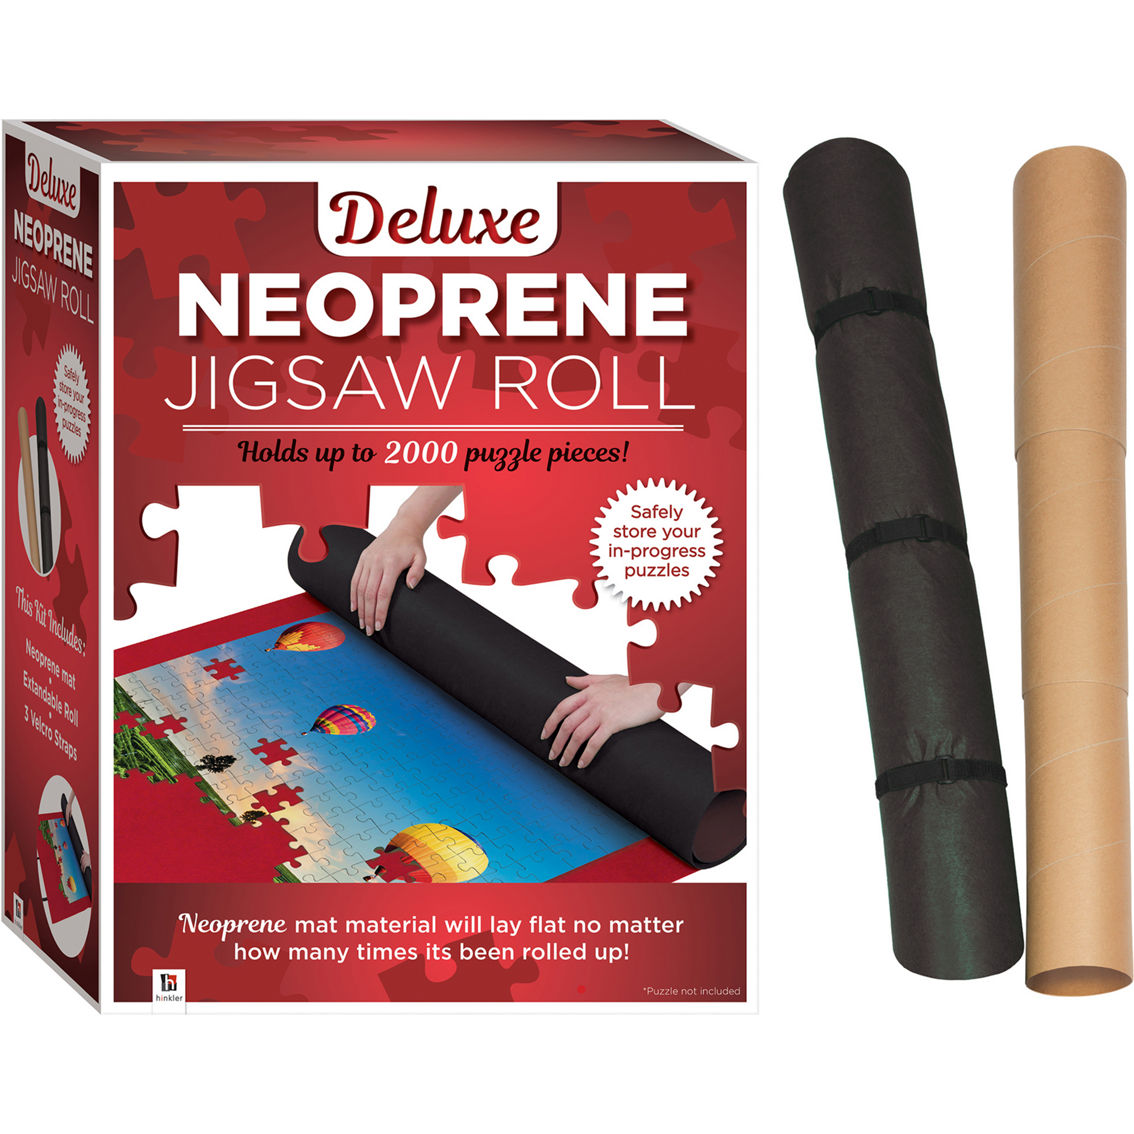 Deluxe Neoprene Jigsaw Roll - Image 3 of 6